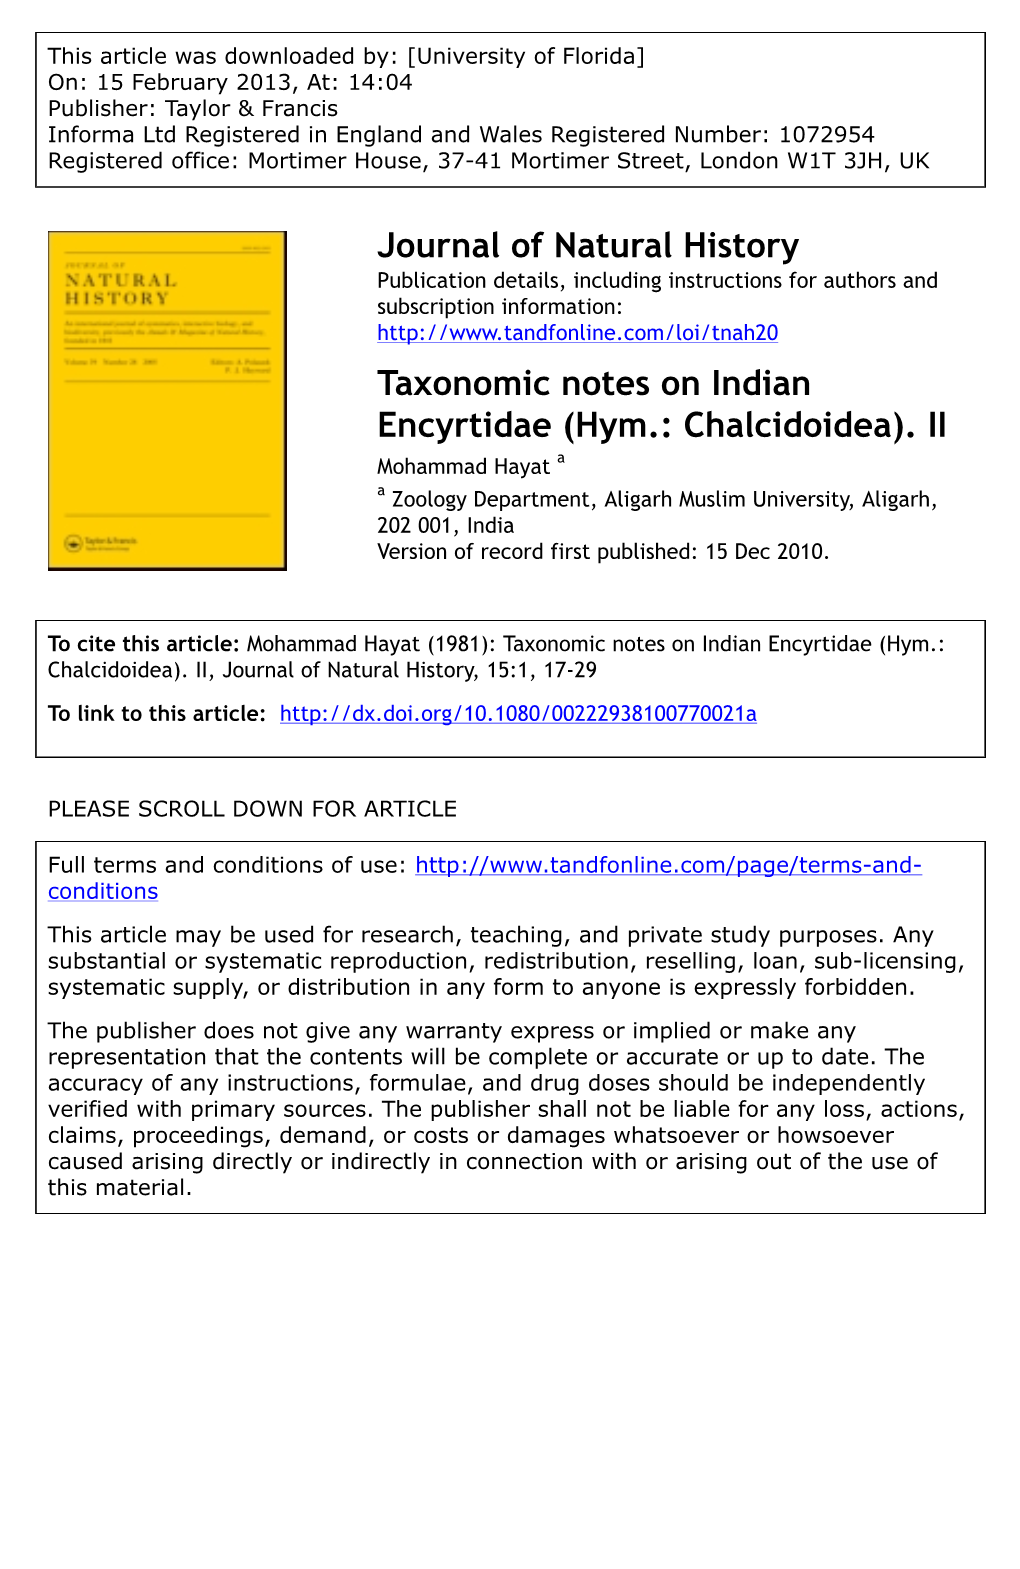 Taxonomic Notes on Indian Encyrtidae (Hym.: Chalcidoidea)